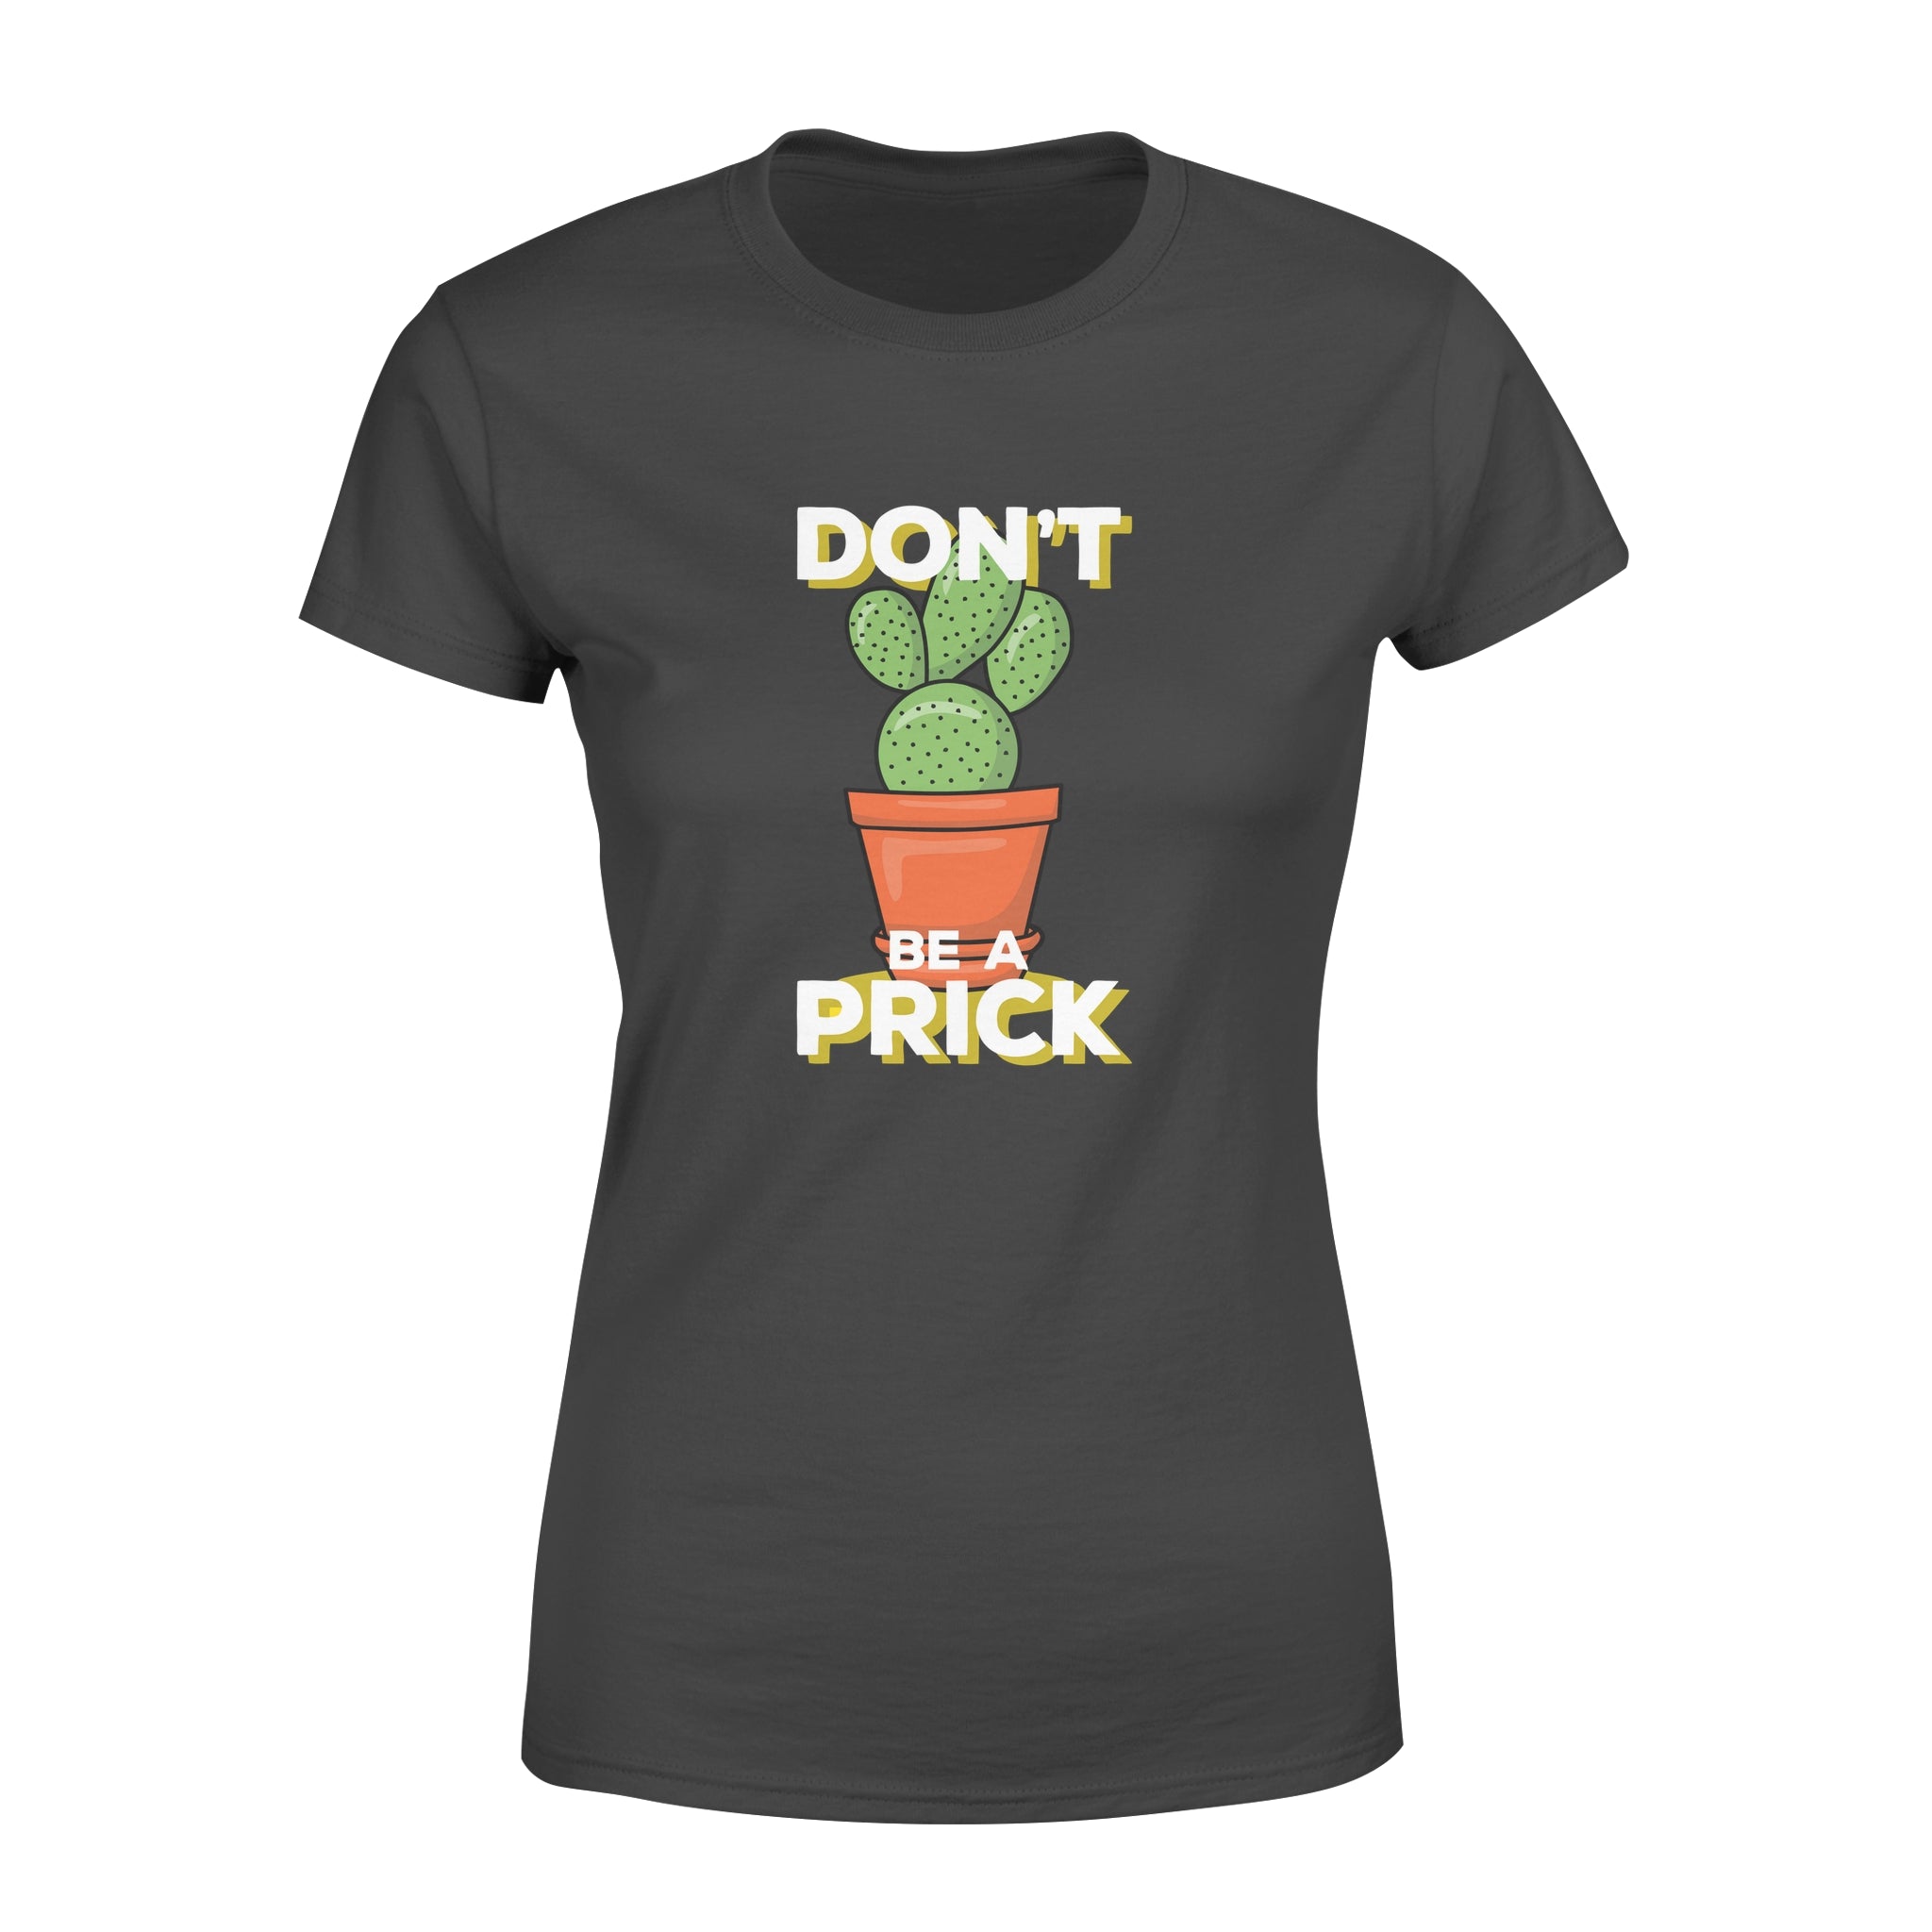 Don't Be A Prick - Women's T-shirt